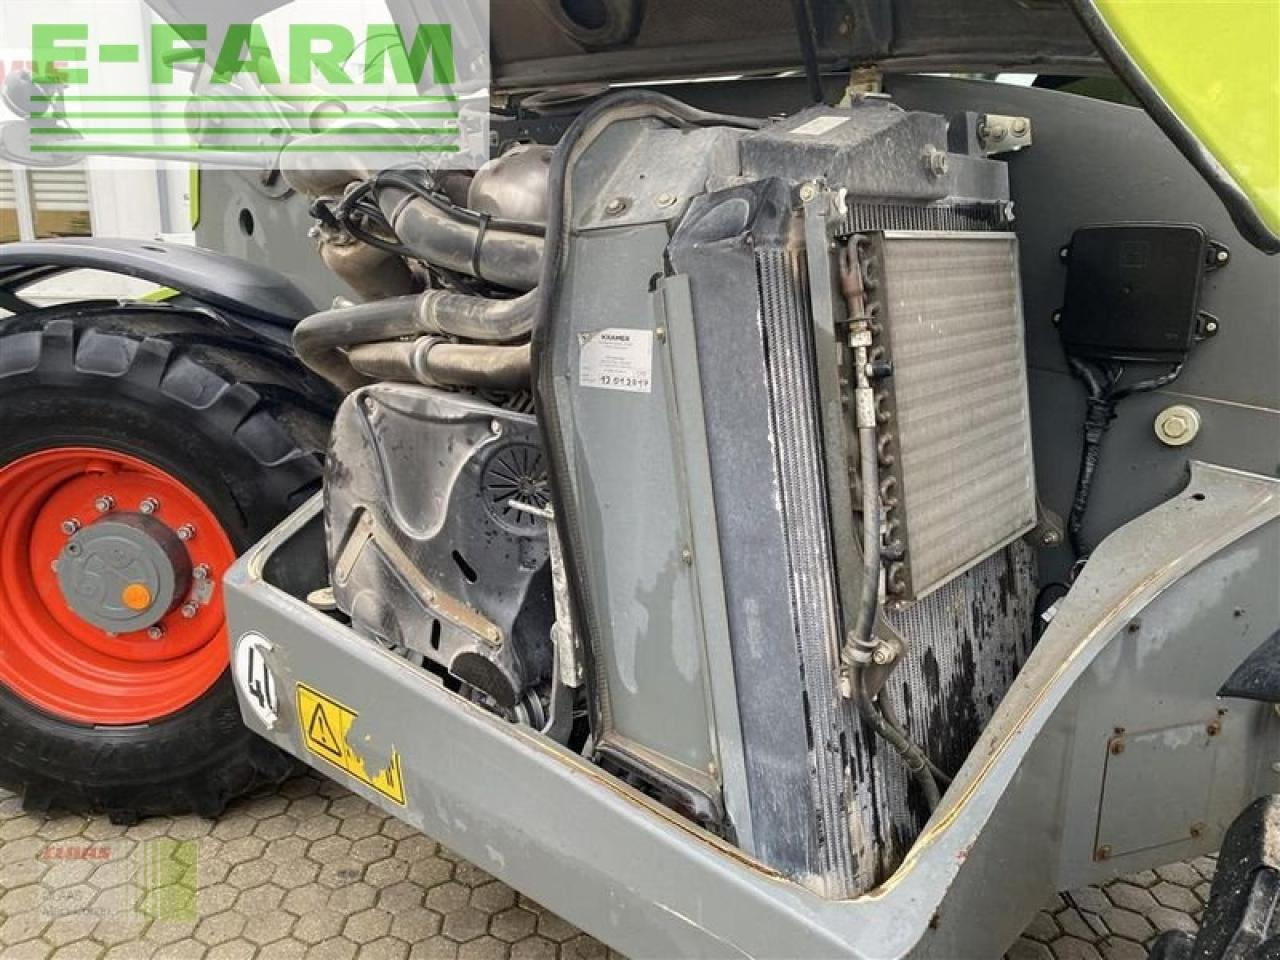 Farm tractor CLAAS scorpion 7050